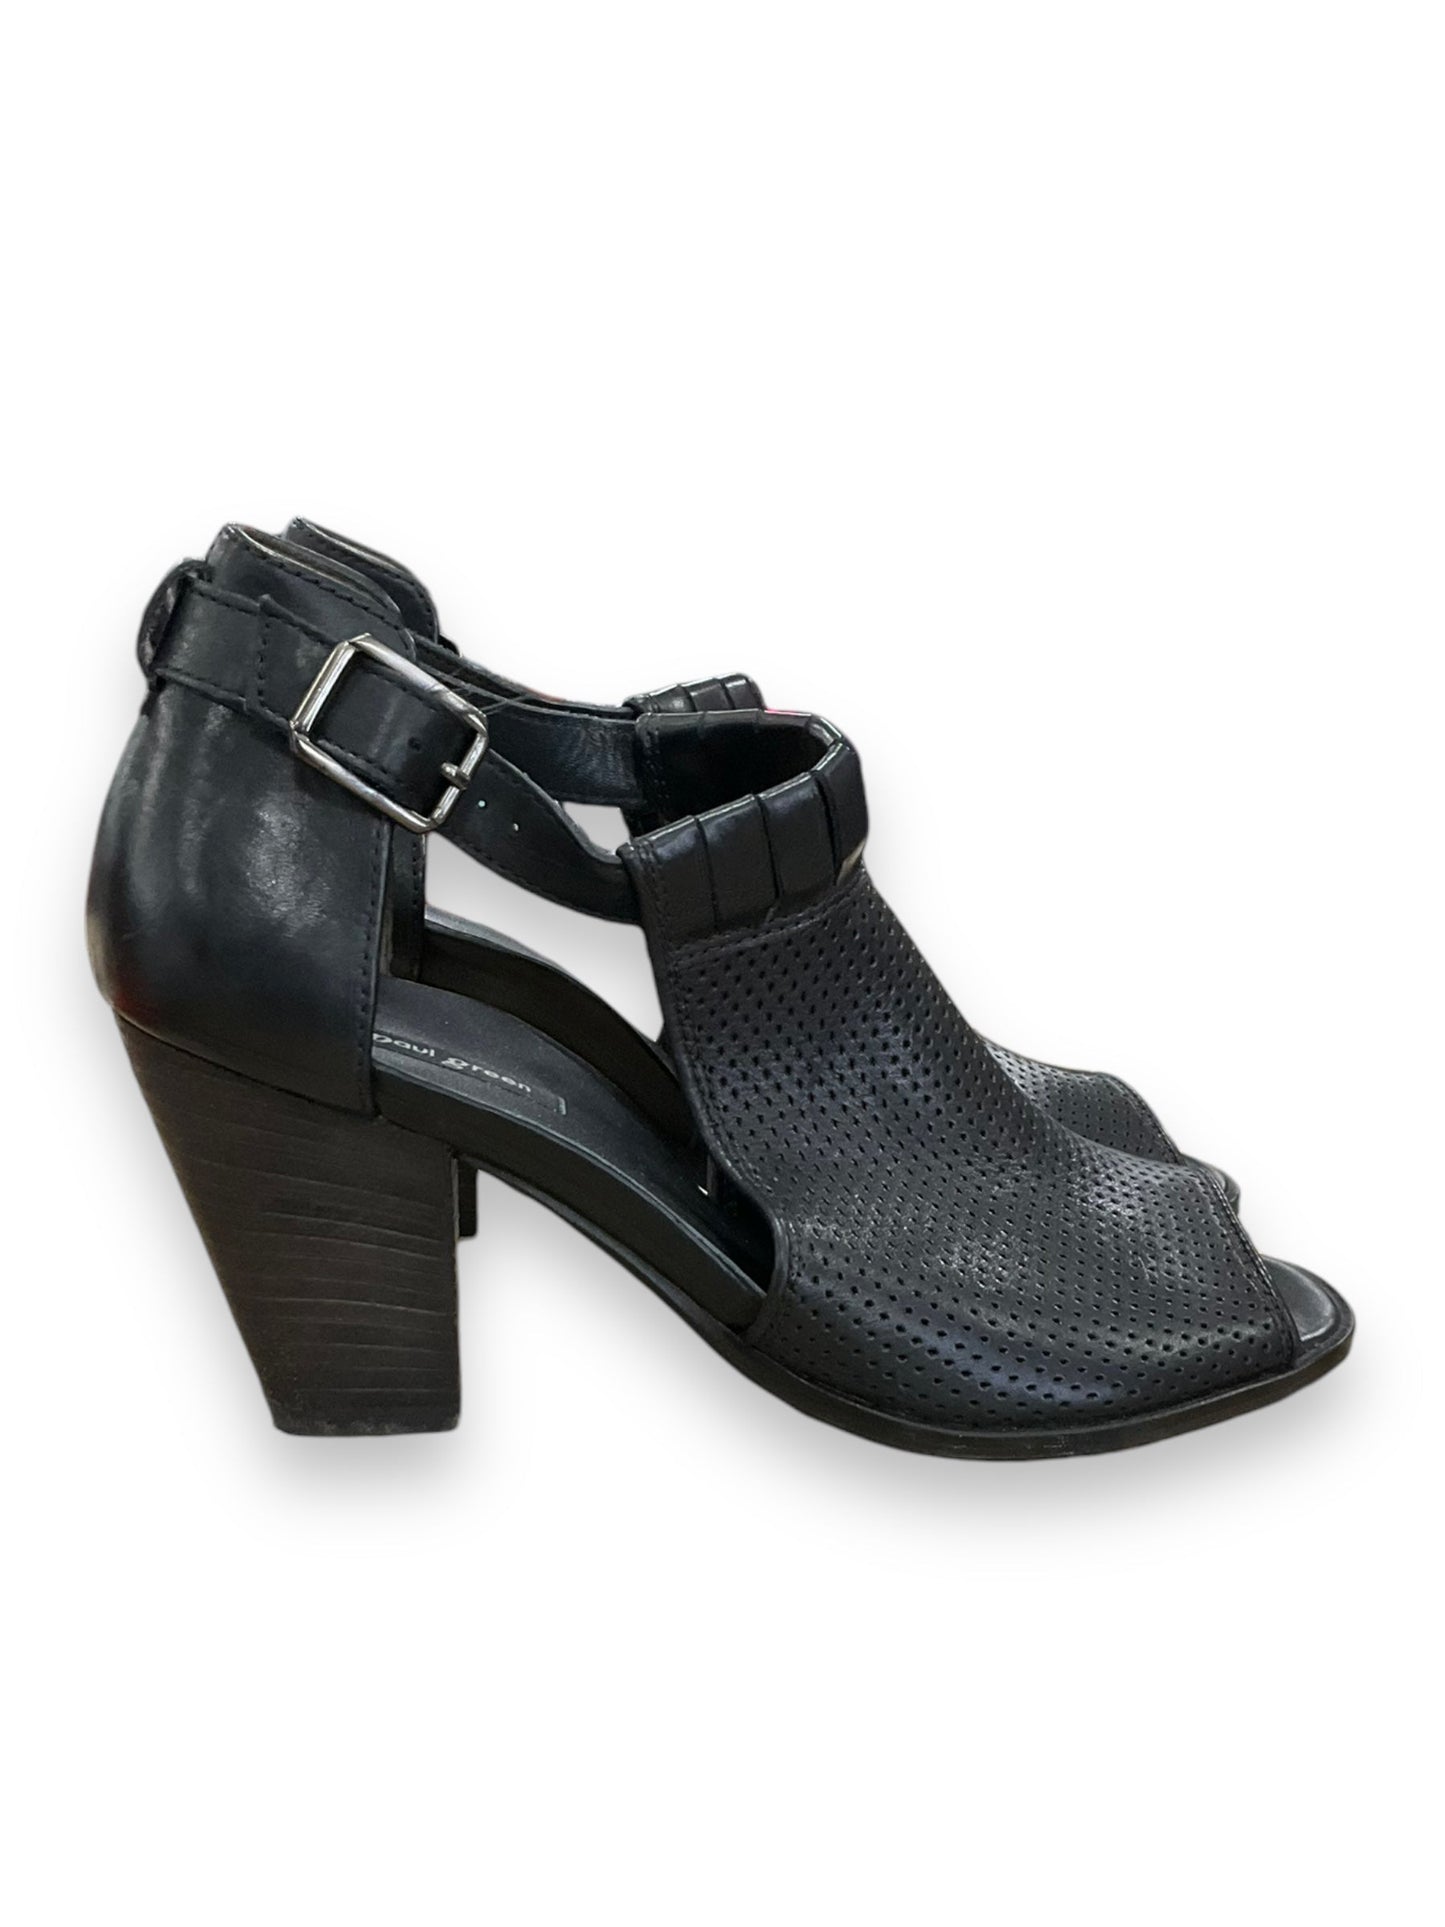 Sandals Heels Block By Paul Green  Size: 5